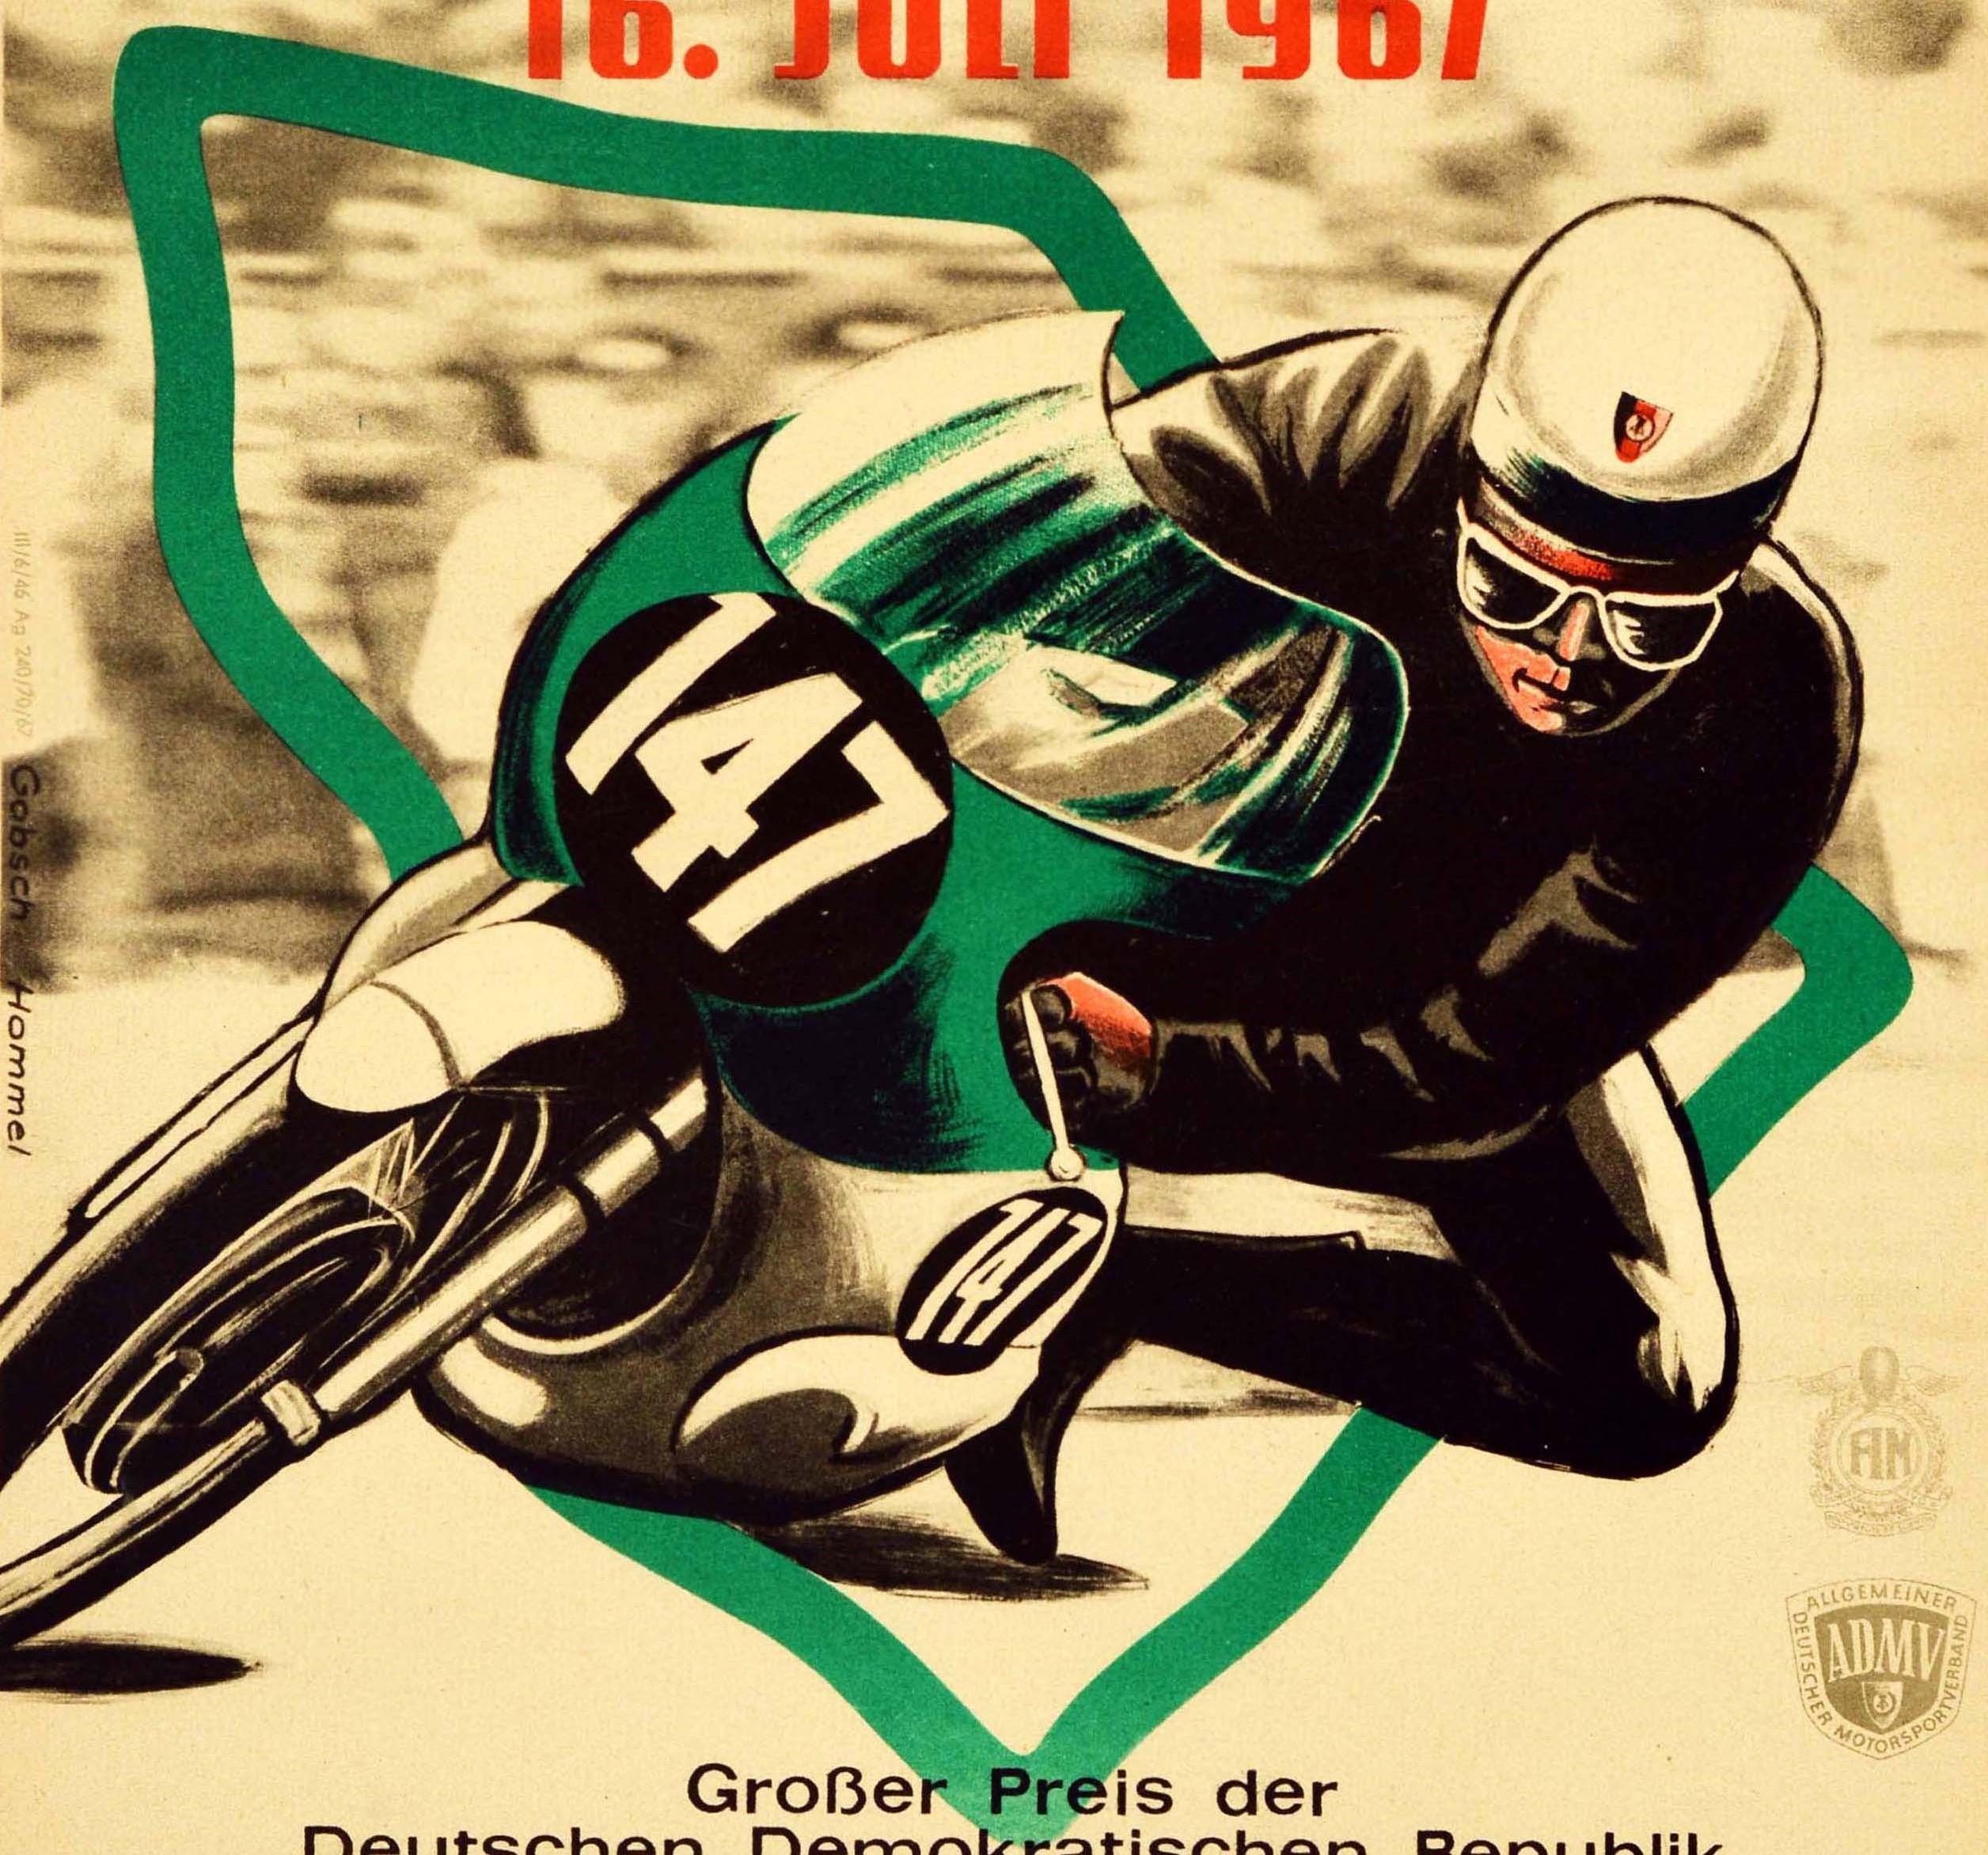 German Original Vintage Poster 40 Years Sachsenring 1967 Grand Prix Motorcycle Race Art